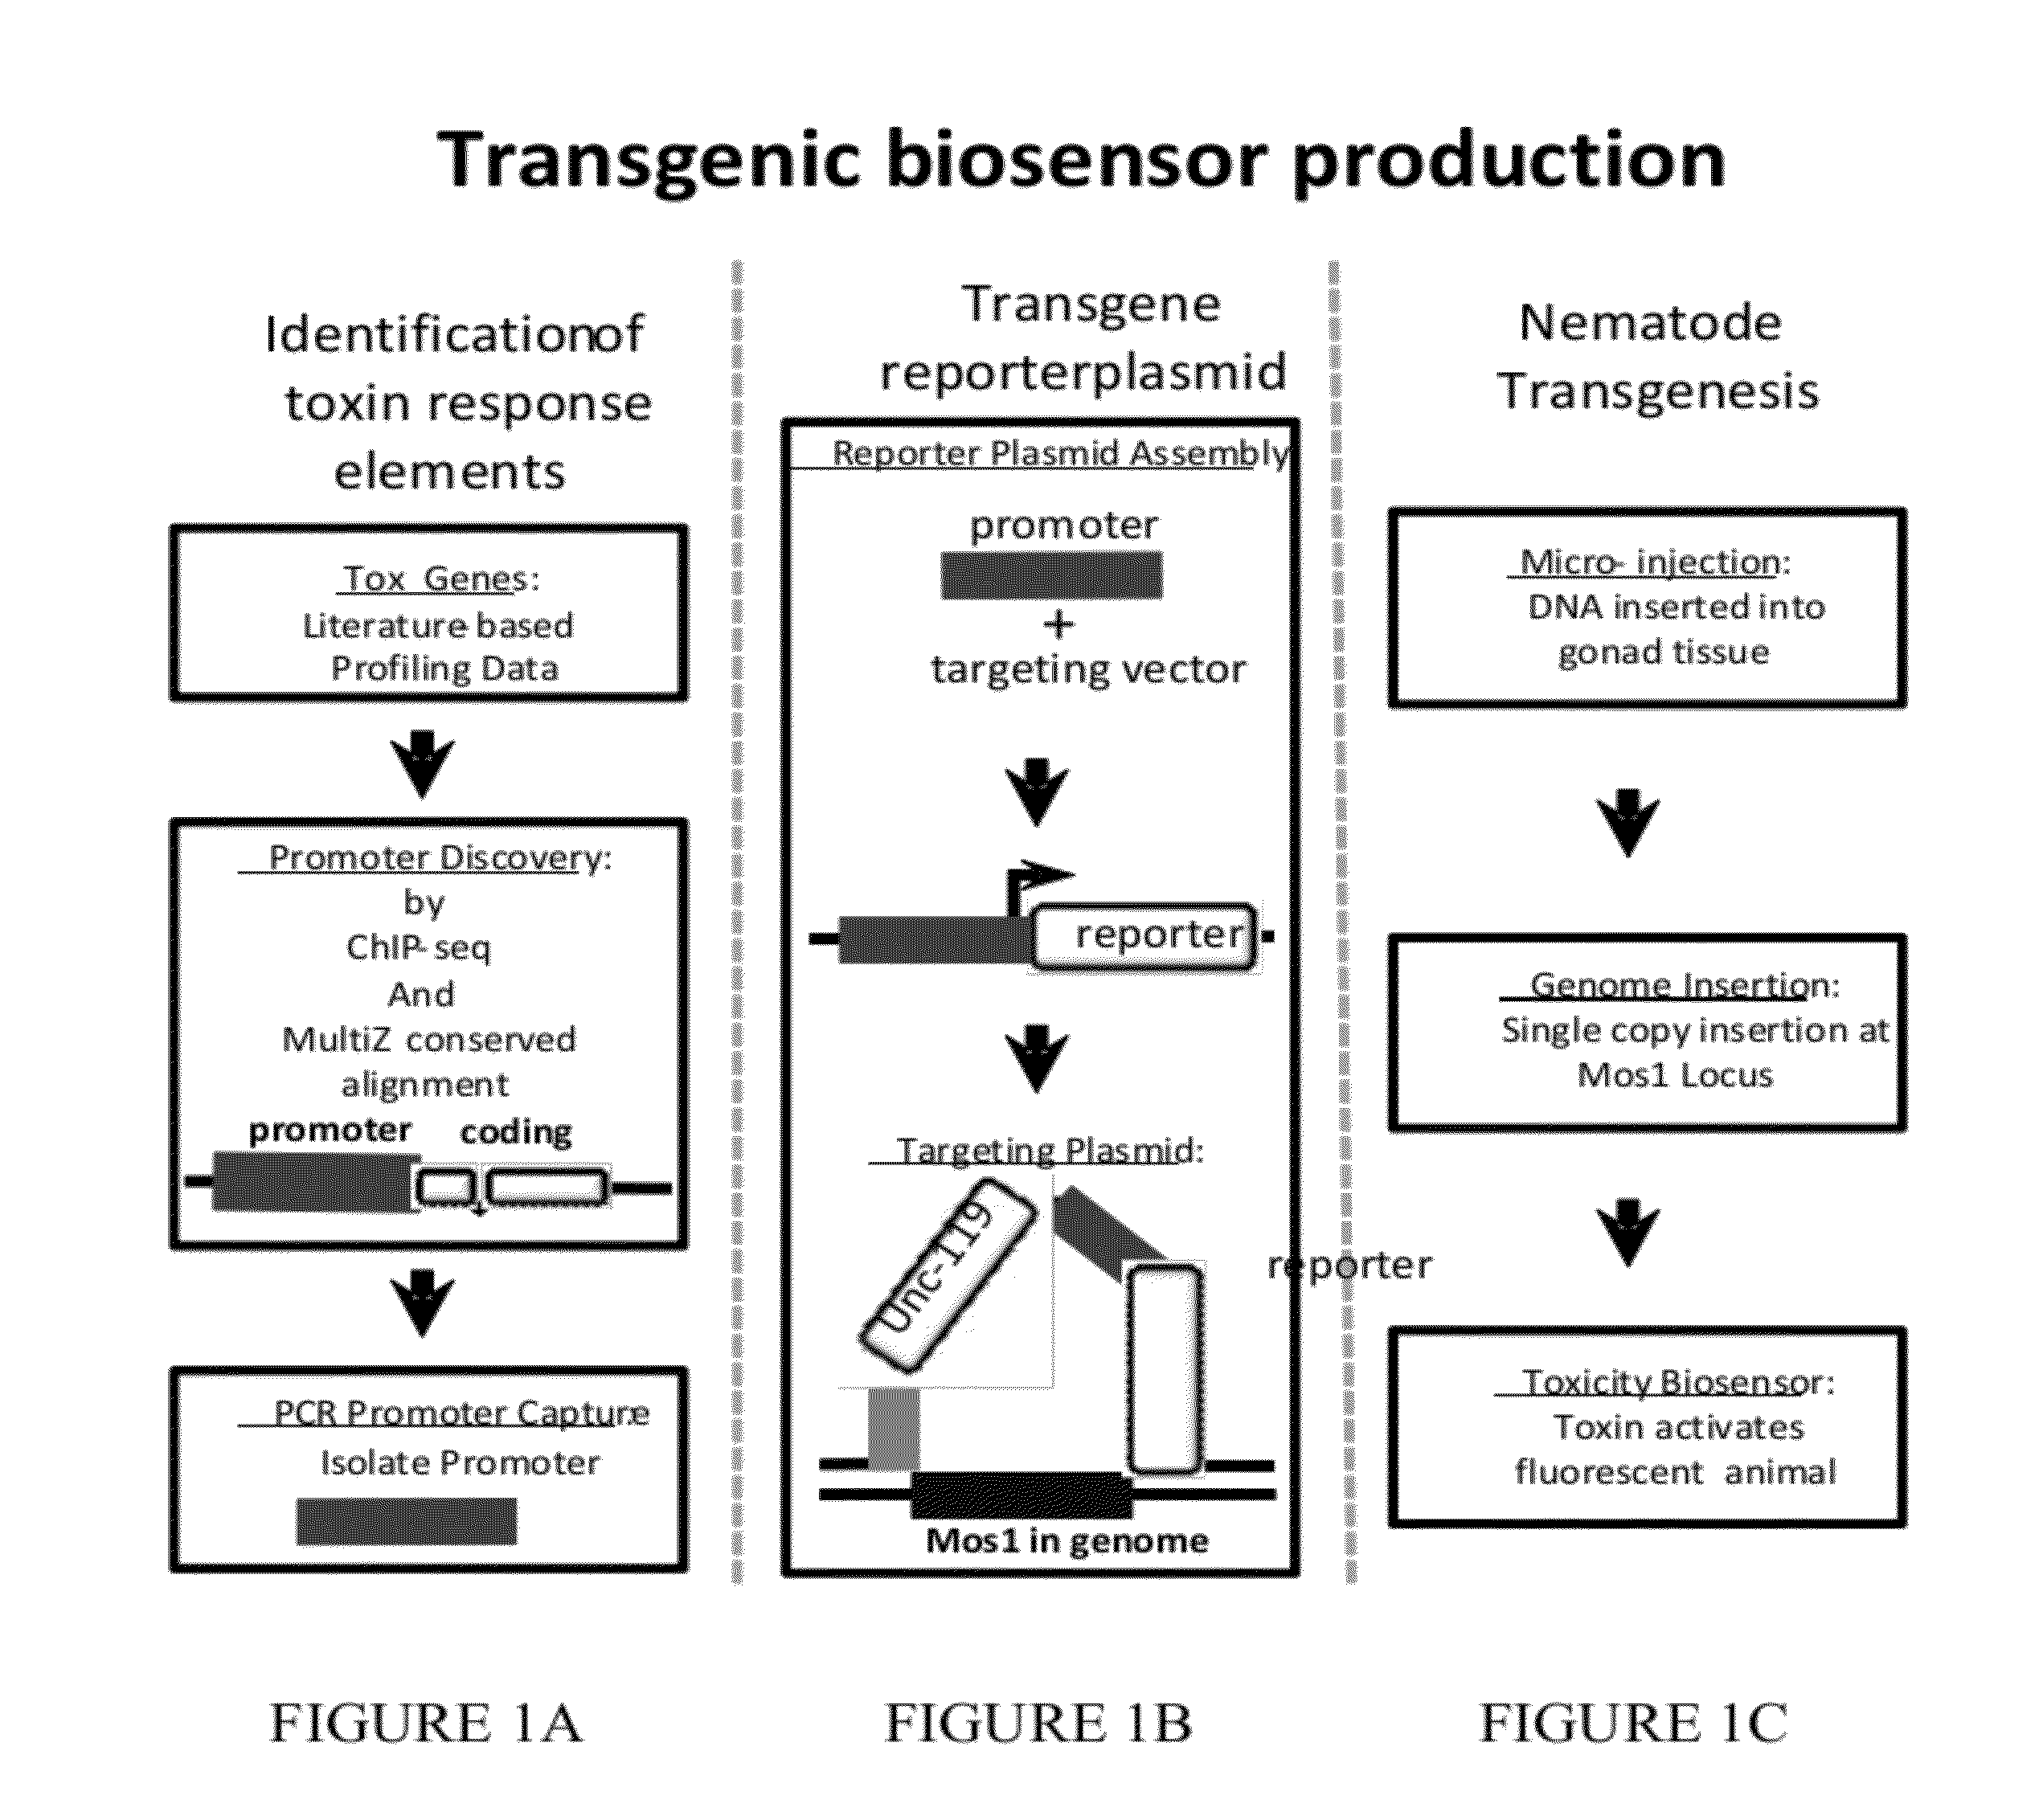 Transgenic biosensors